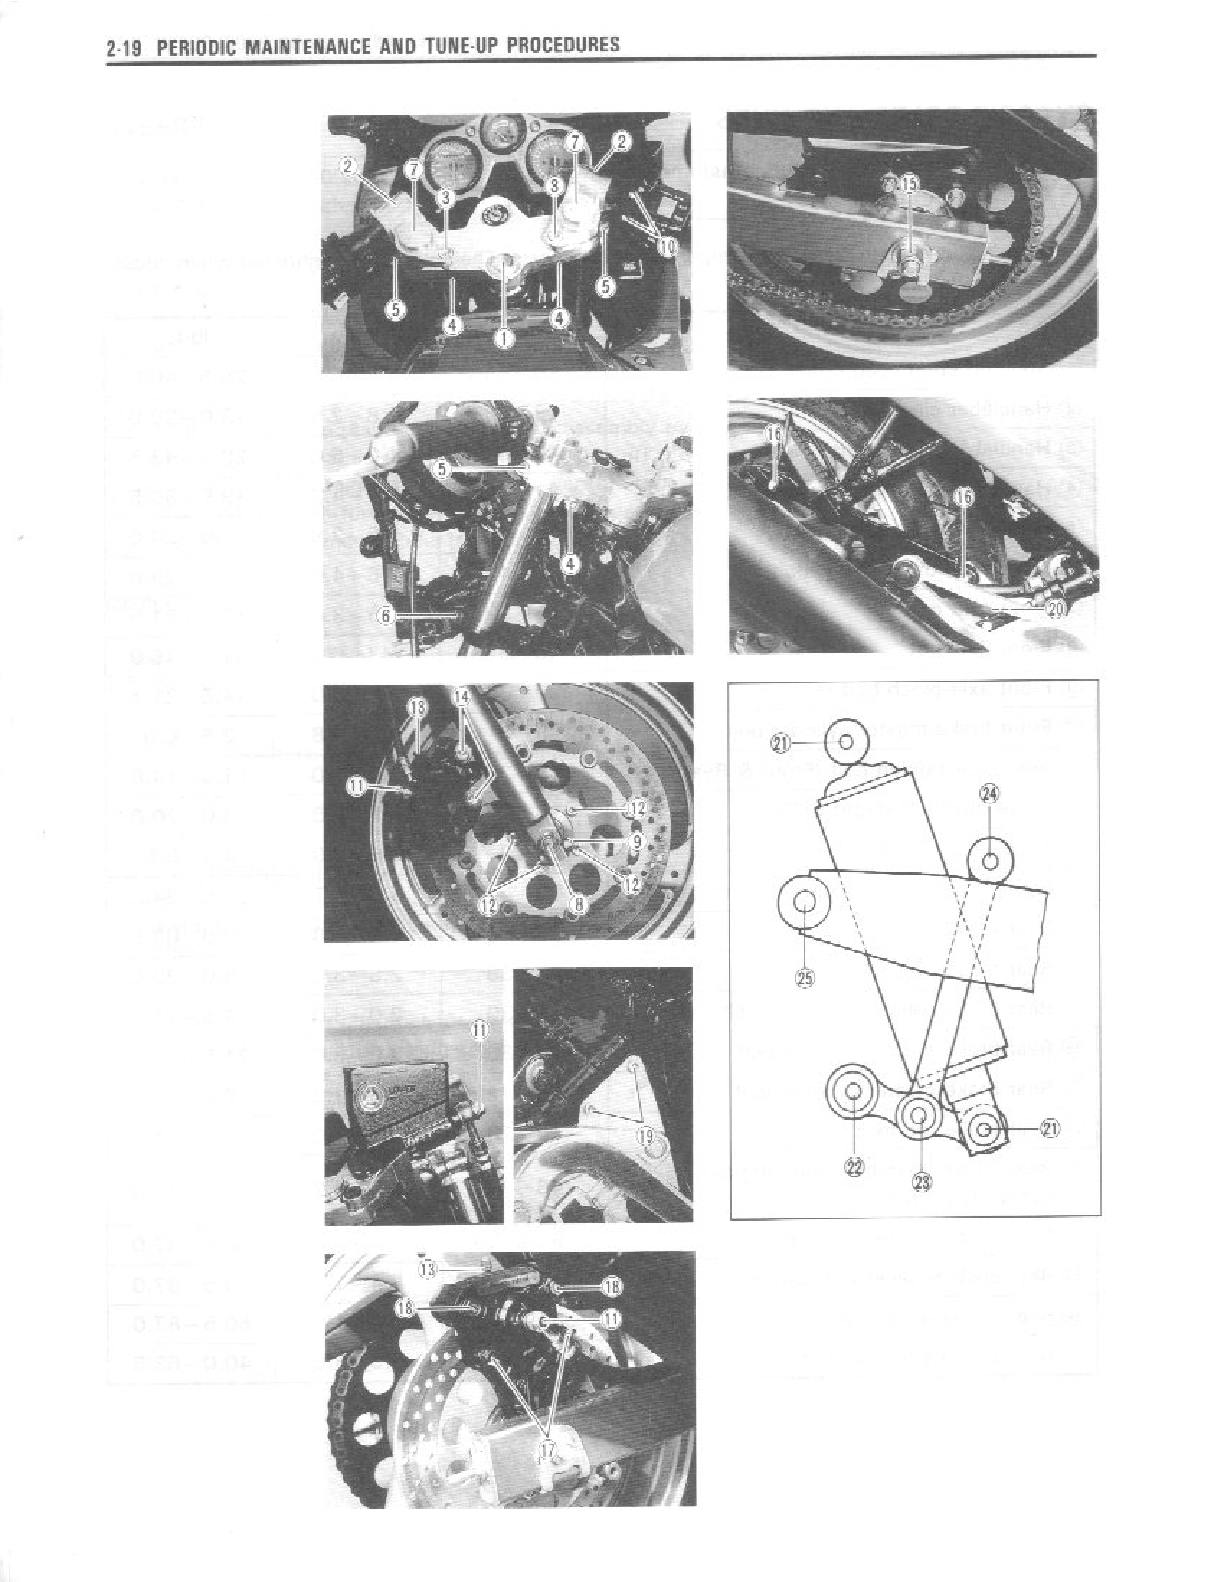 1990-1998 Suzuki GSX250F Across Service Manual